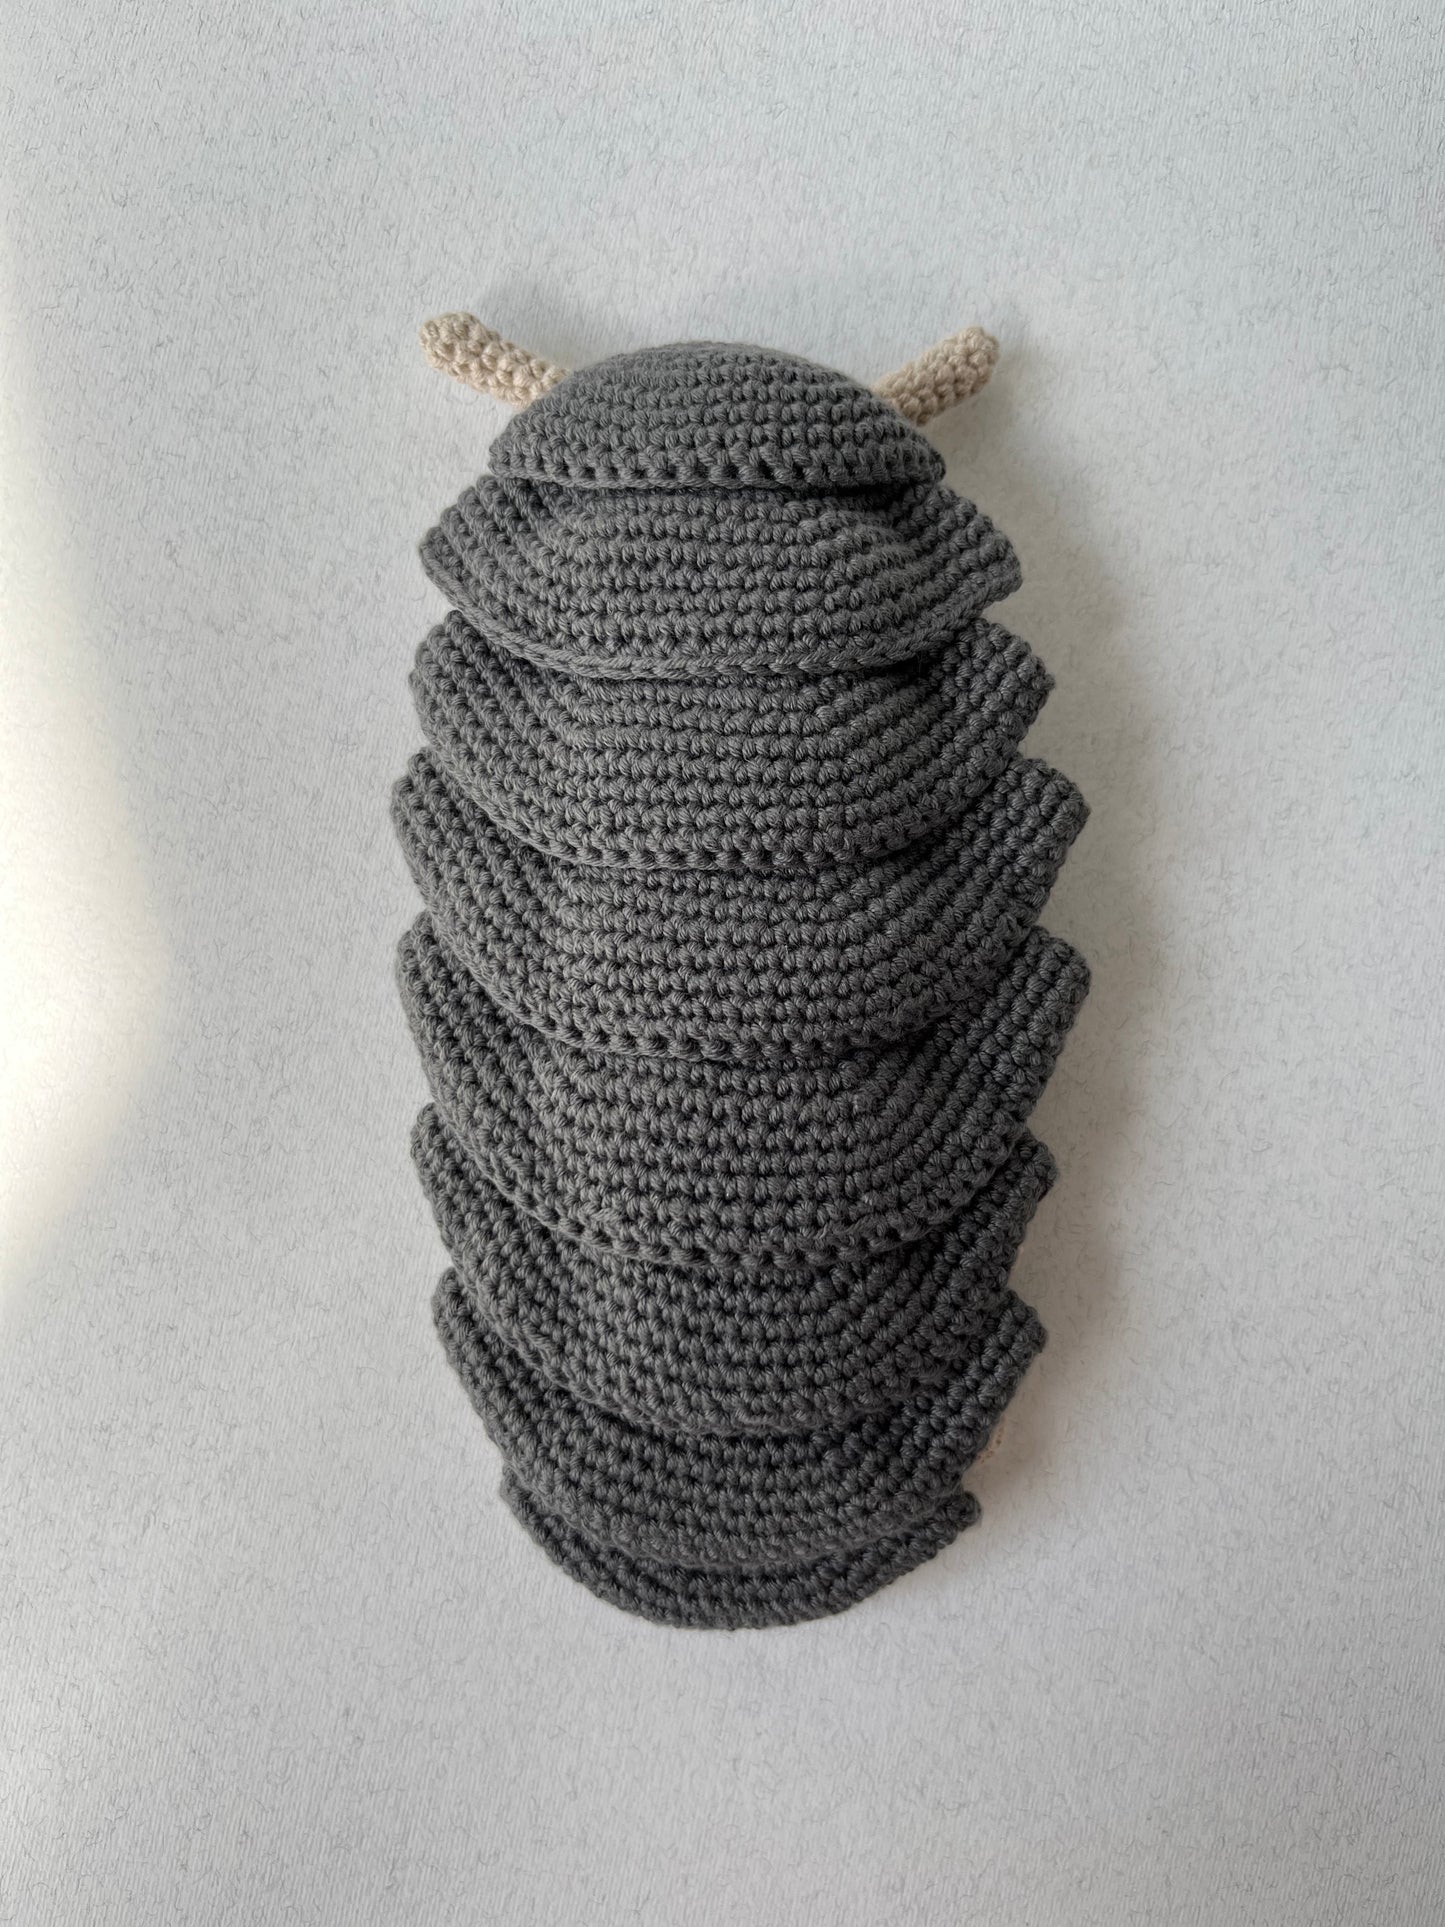 Roly Poly Pill Bug Crochet Pattern, Isopod Amigurumi, PDF File in English Language